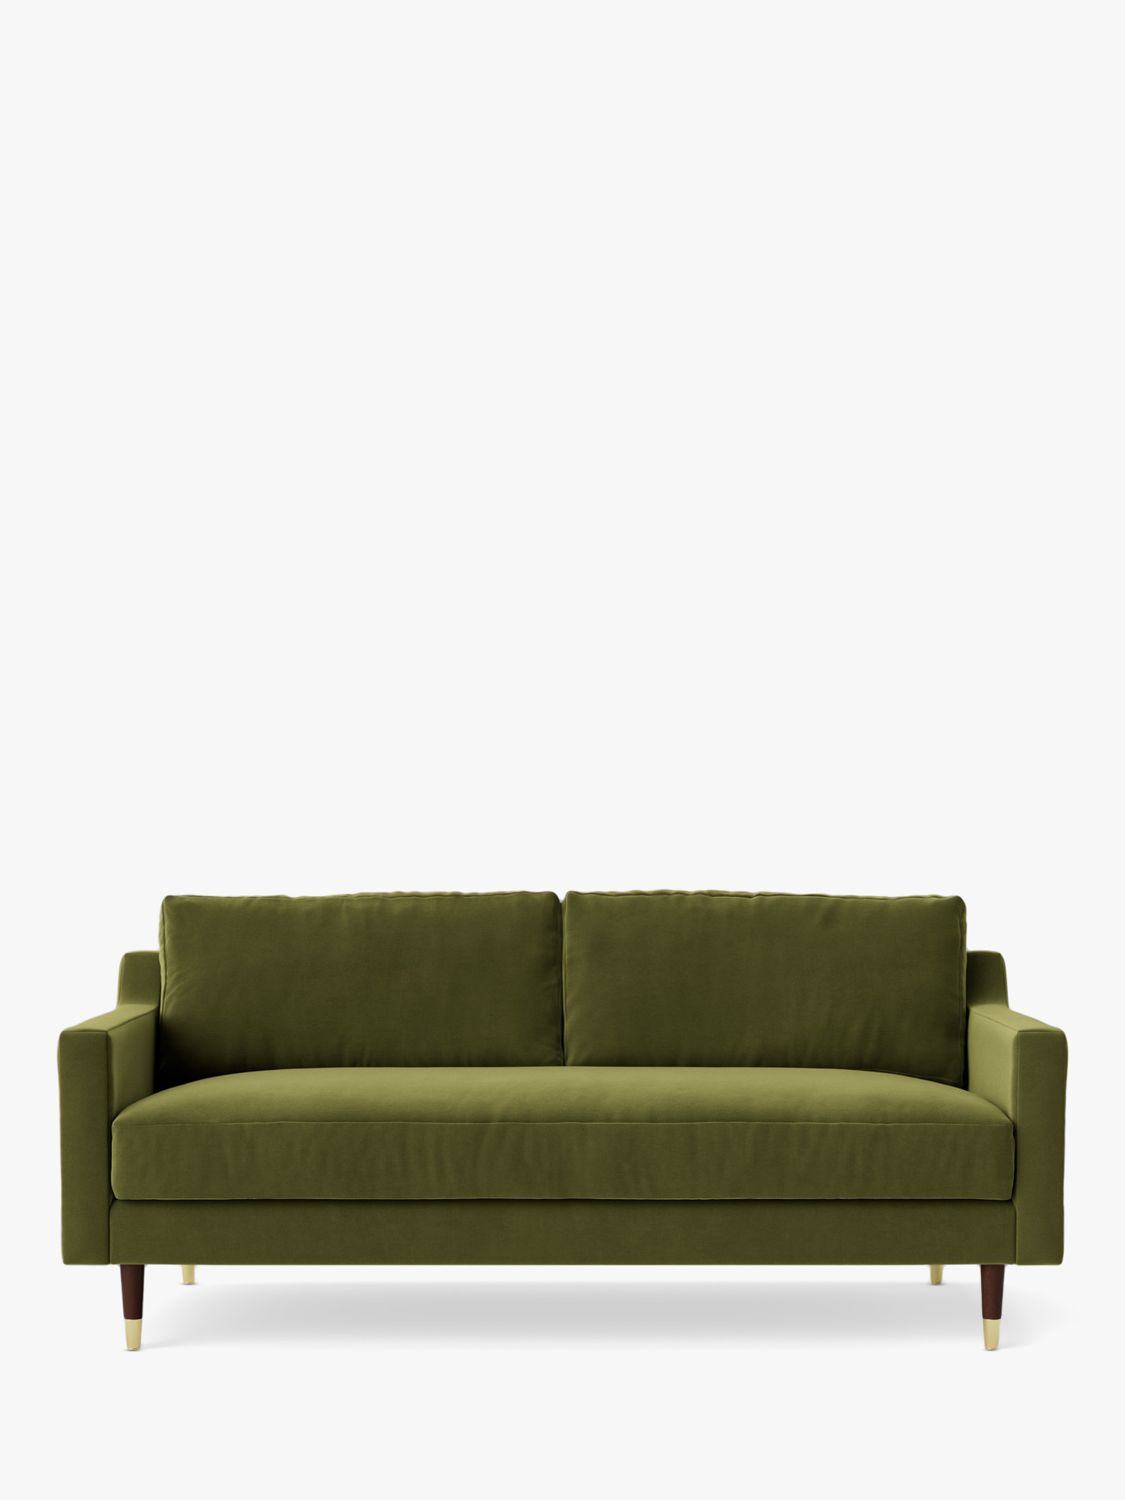 Swoon Rieti Medium 2 Seater Sofa